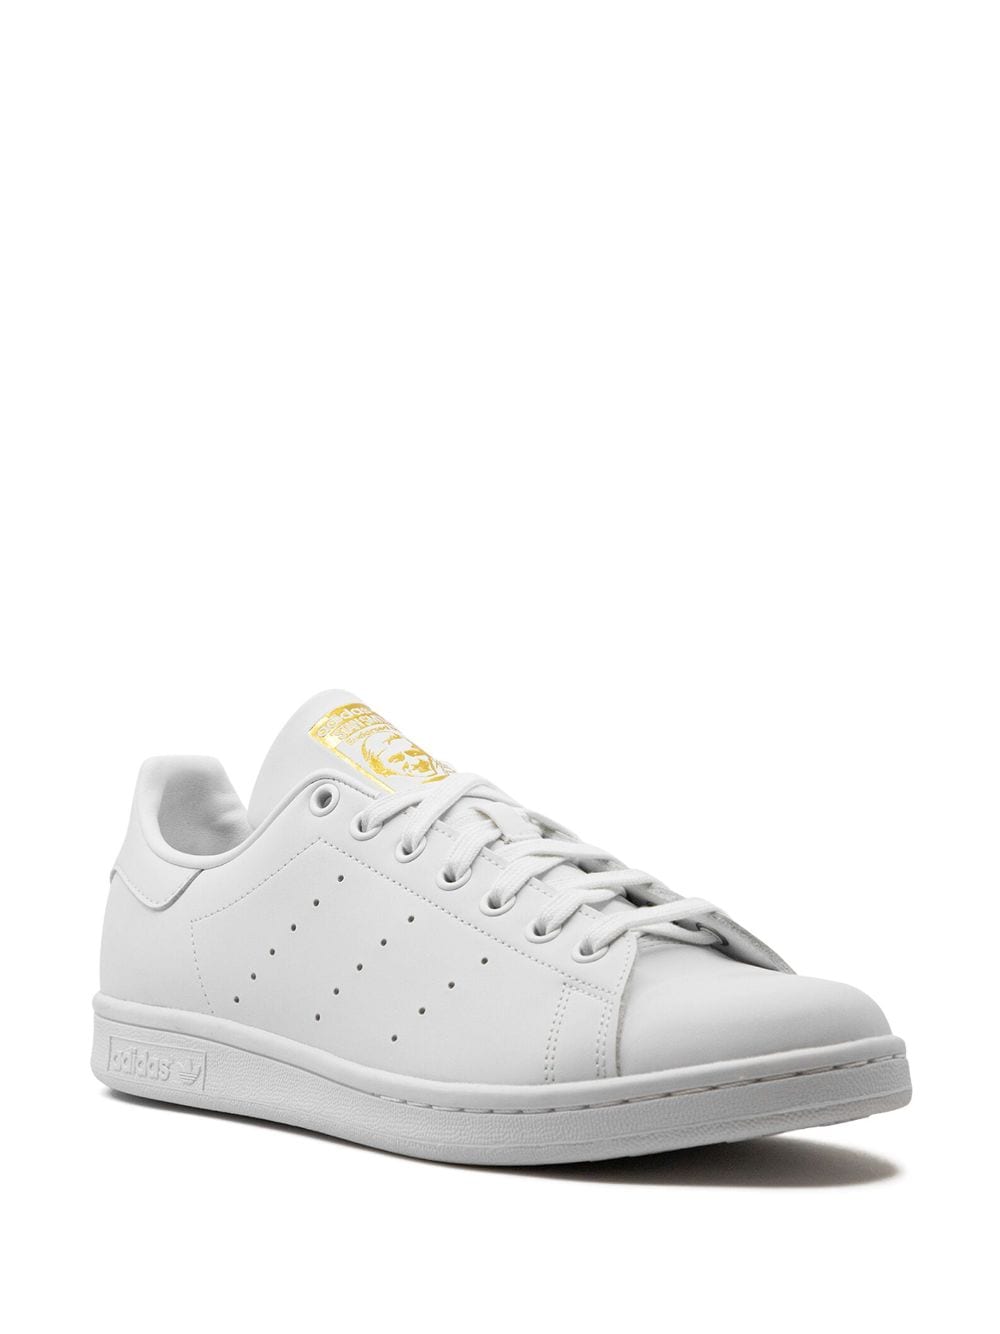 Shop Adidas Originals Stan Smith "white/gold" Sneakers